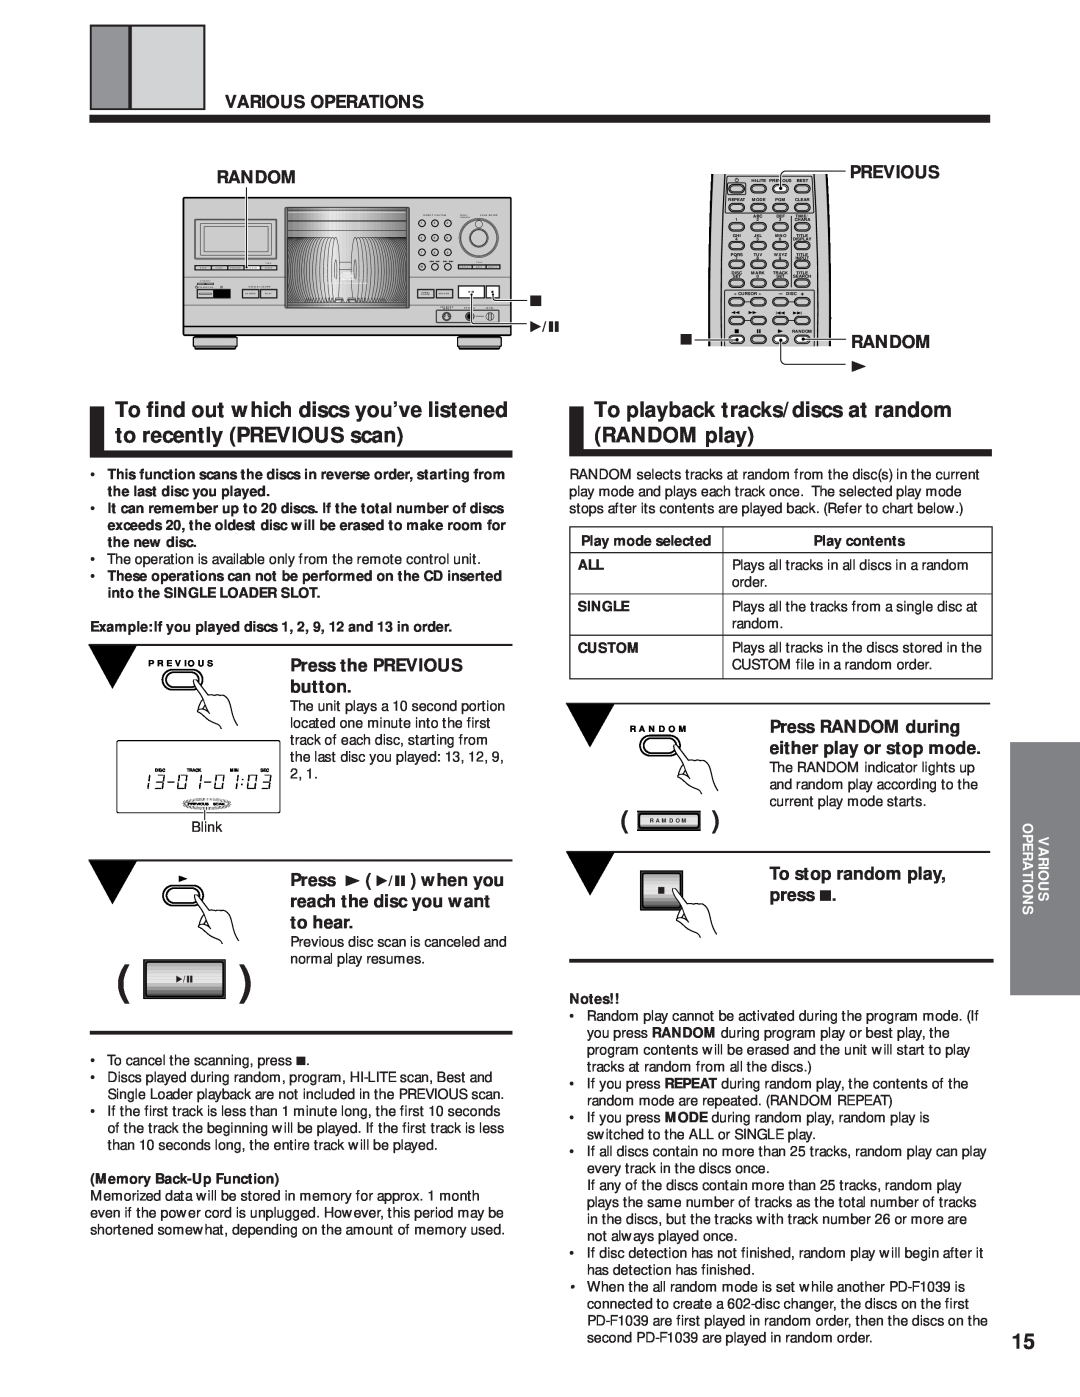 Pioneer PD-F1039 manual To playback tracks/discs at random RANDOM play 